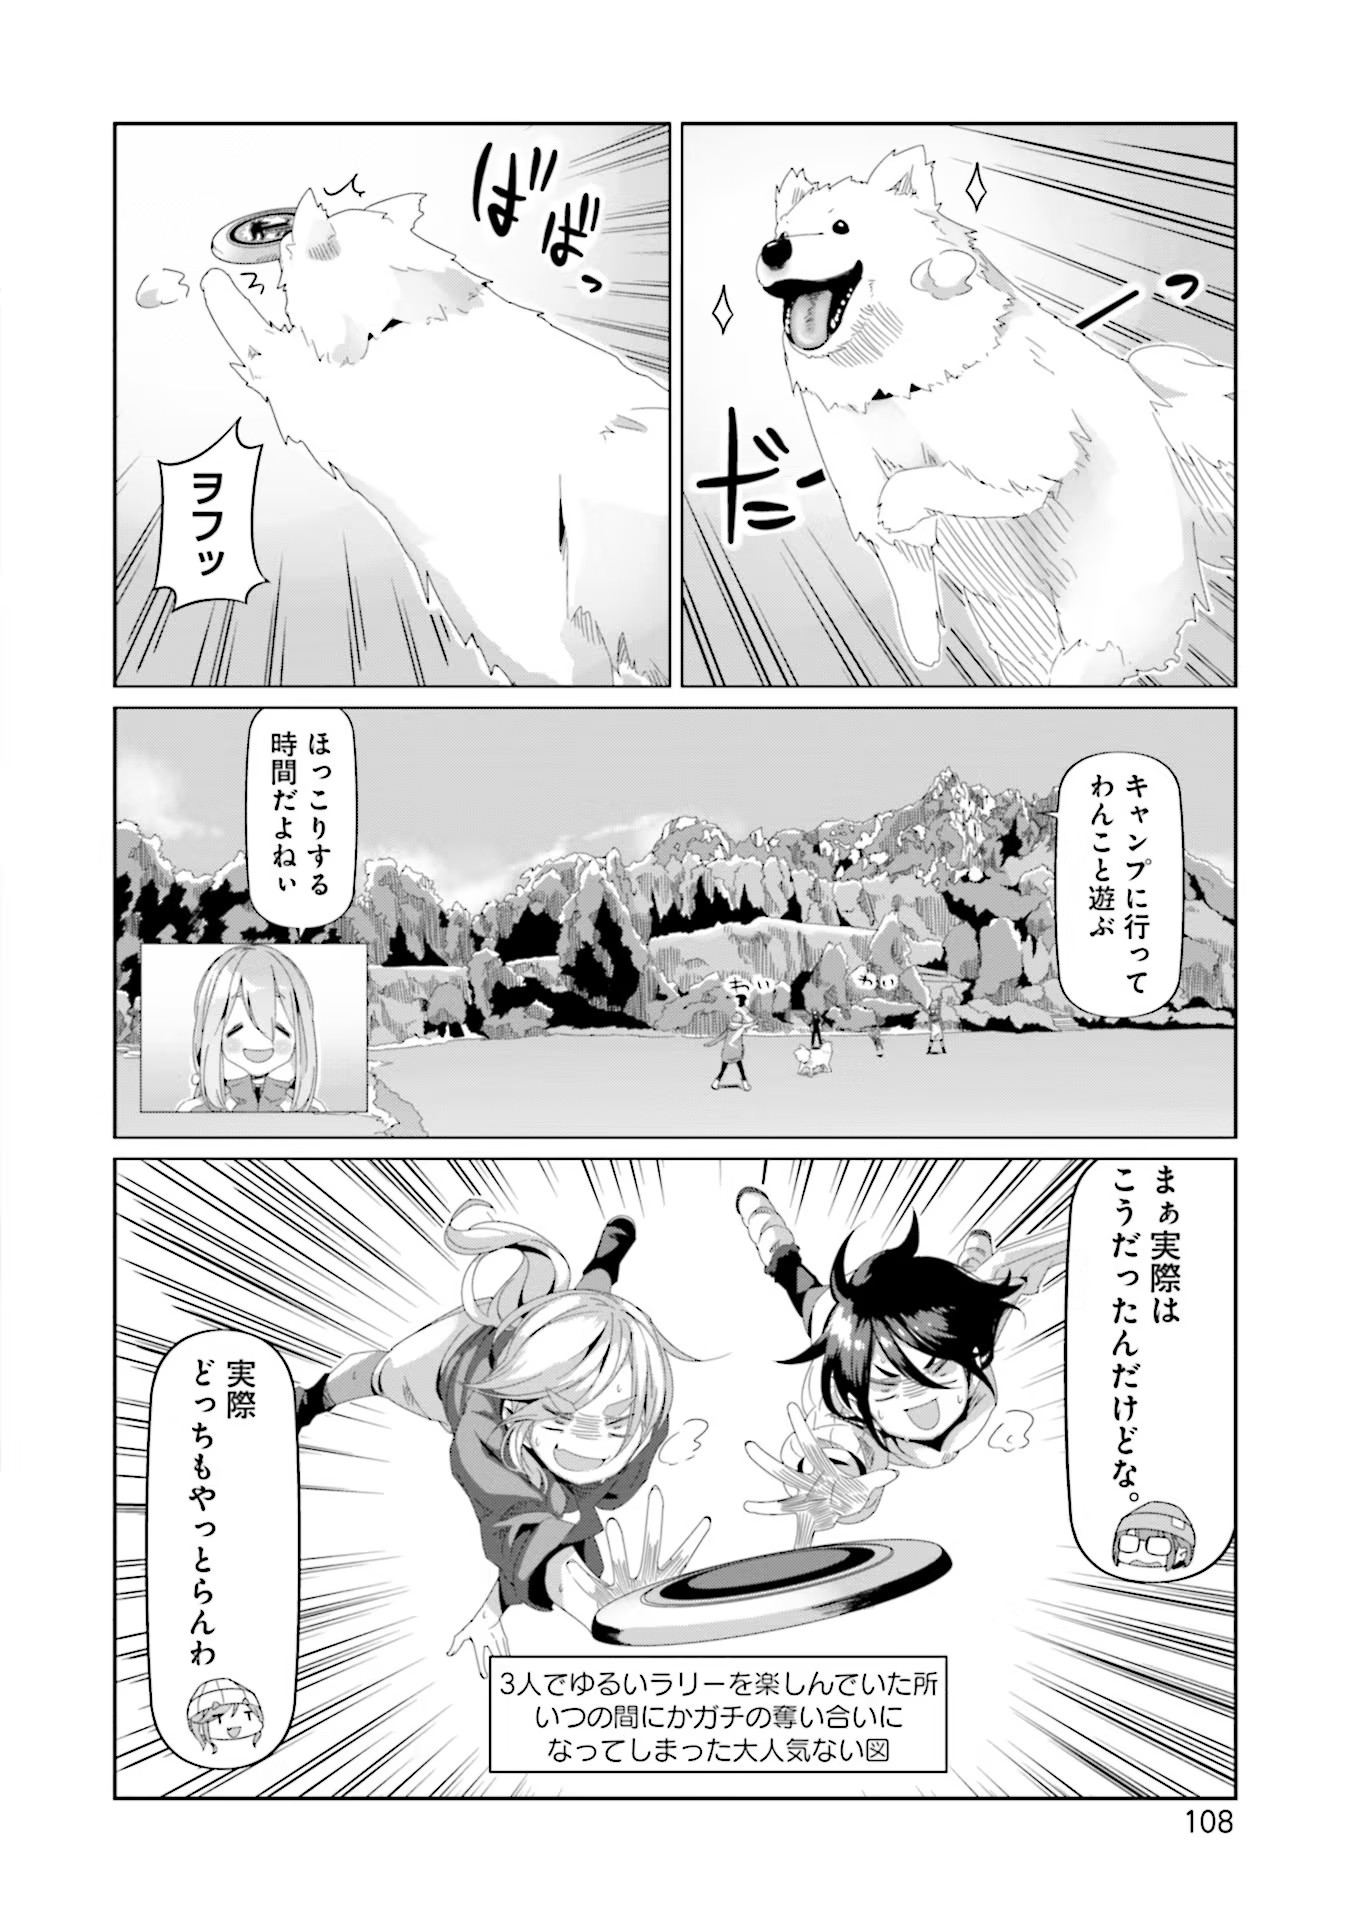 Yuru Camp - Chapter 68 - Page 2